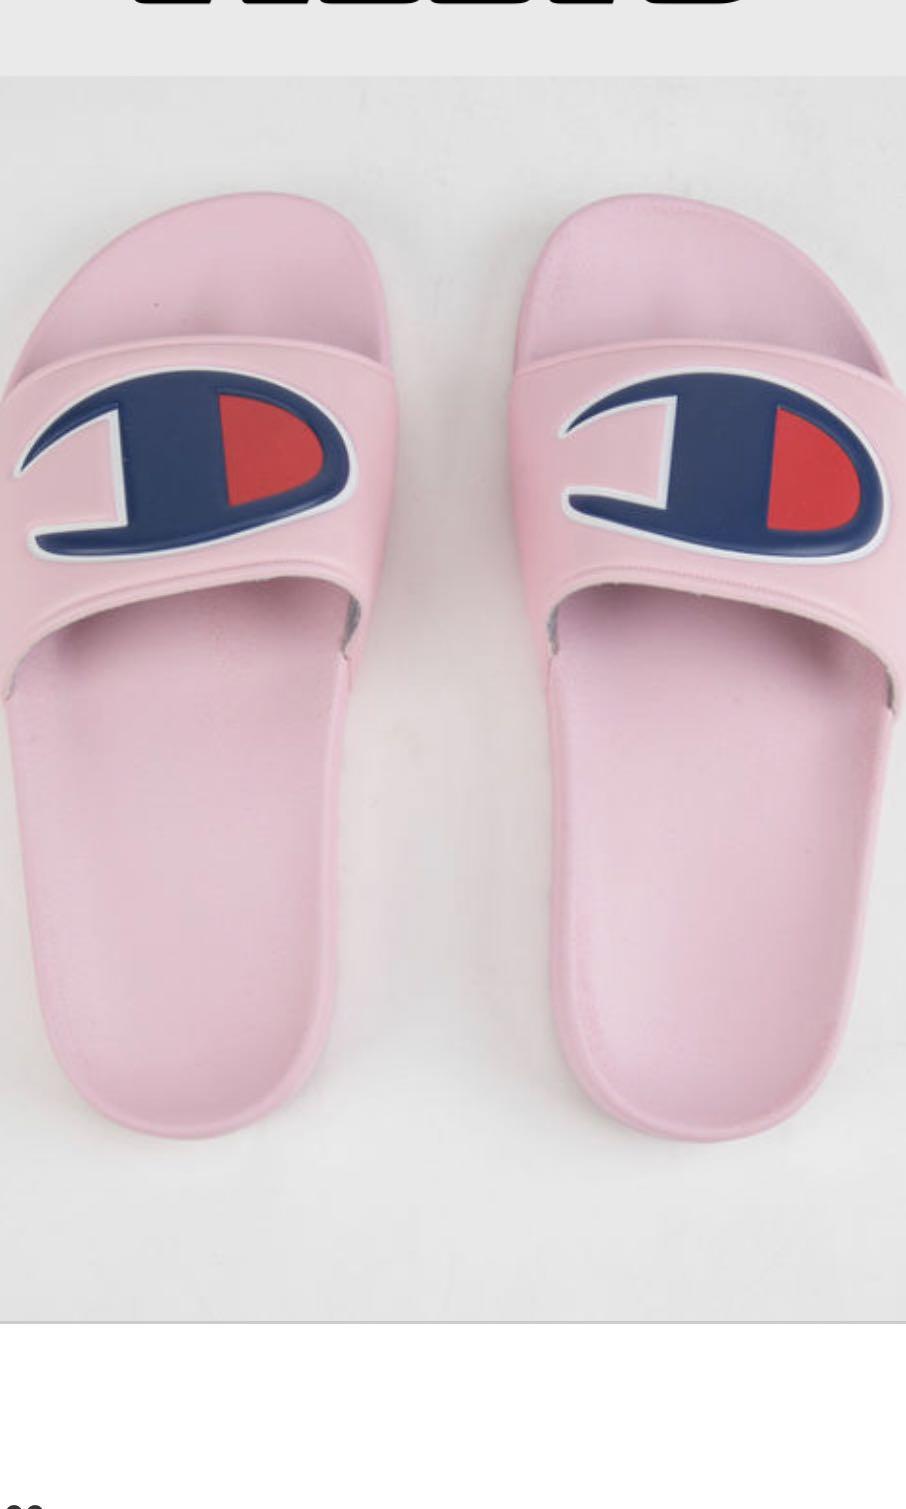 pink champion sandals